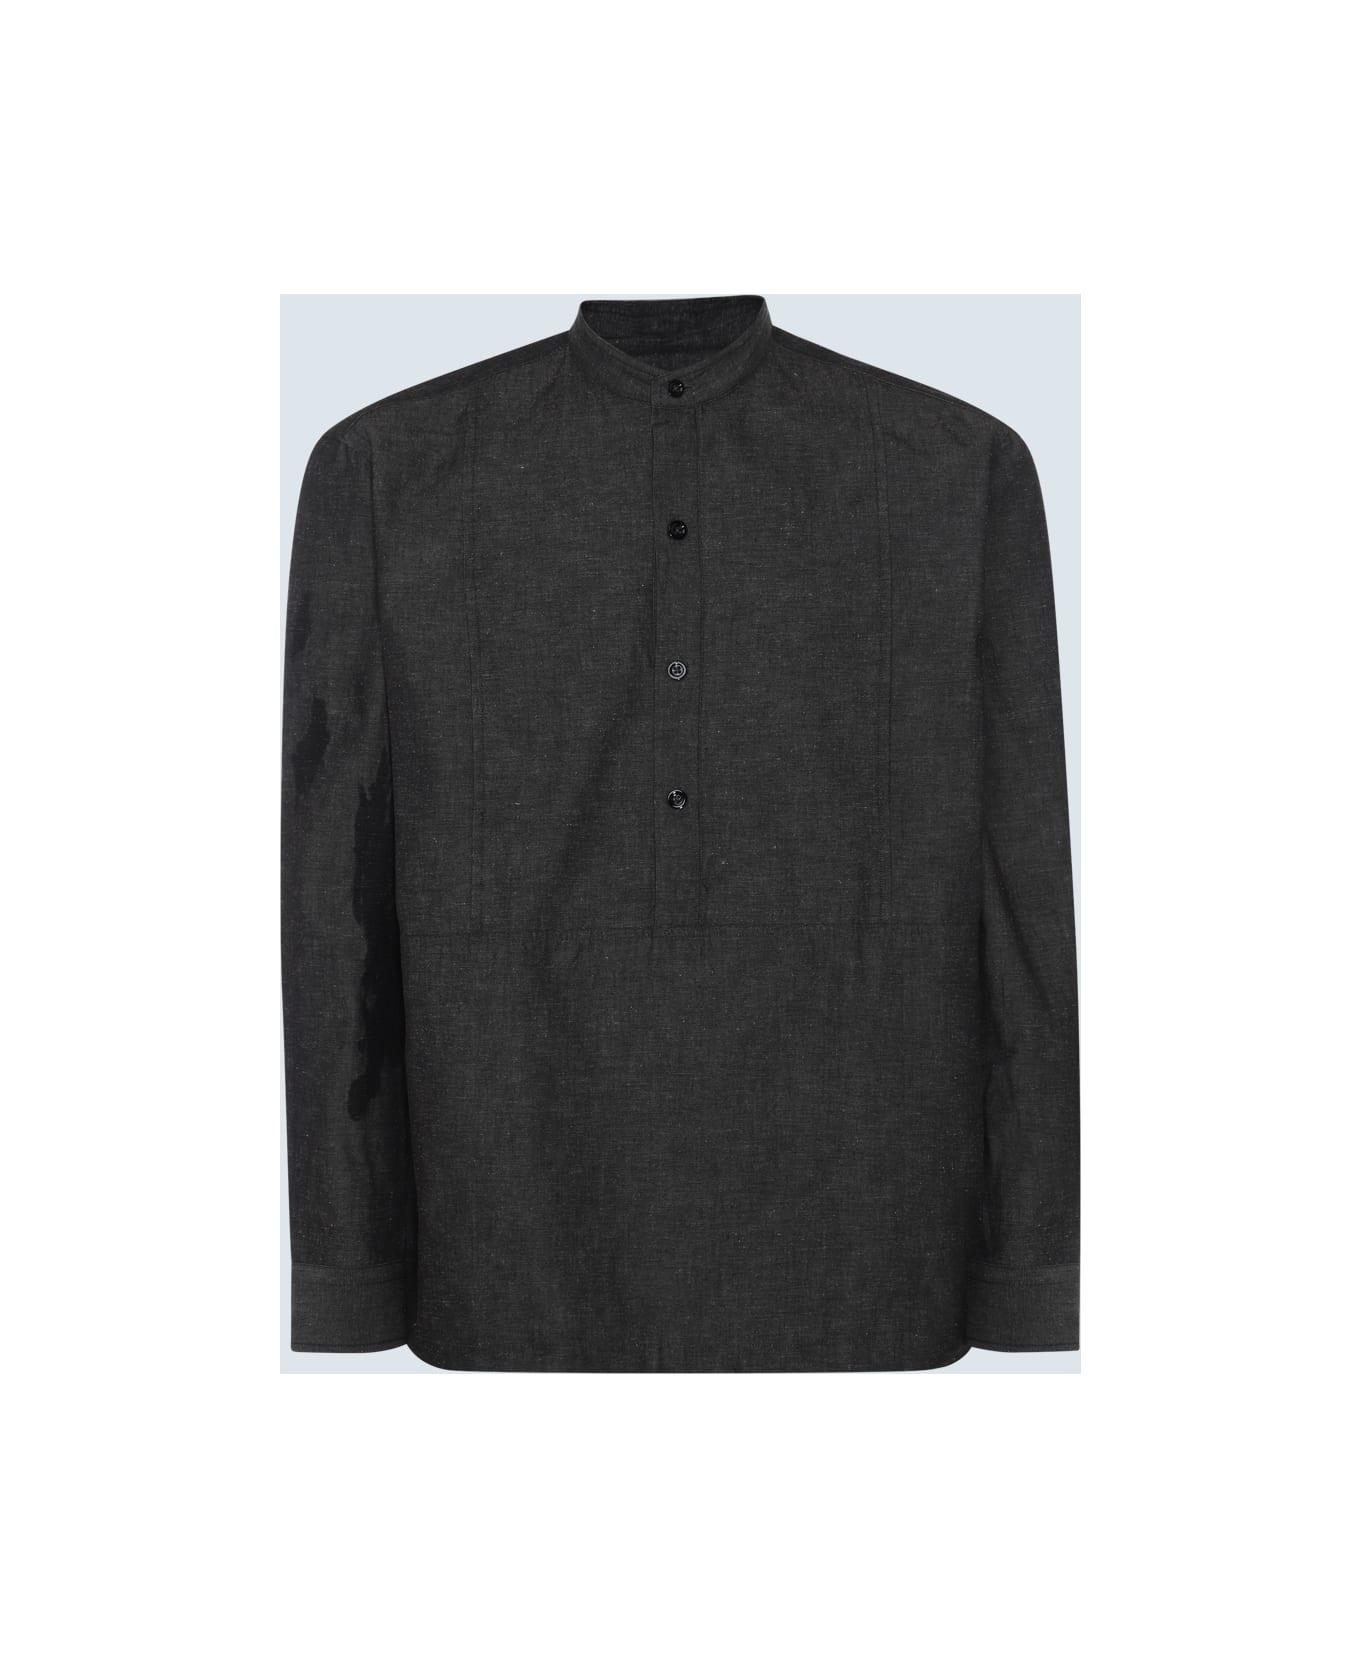 PT Torino Black Linen Shirt - Black